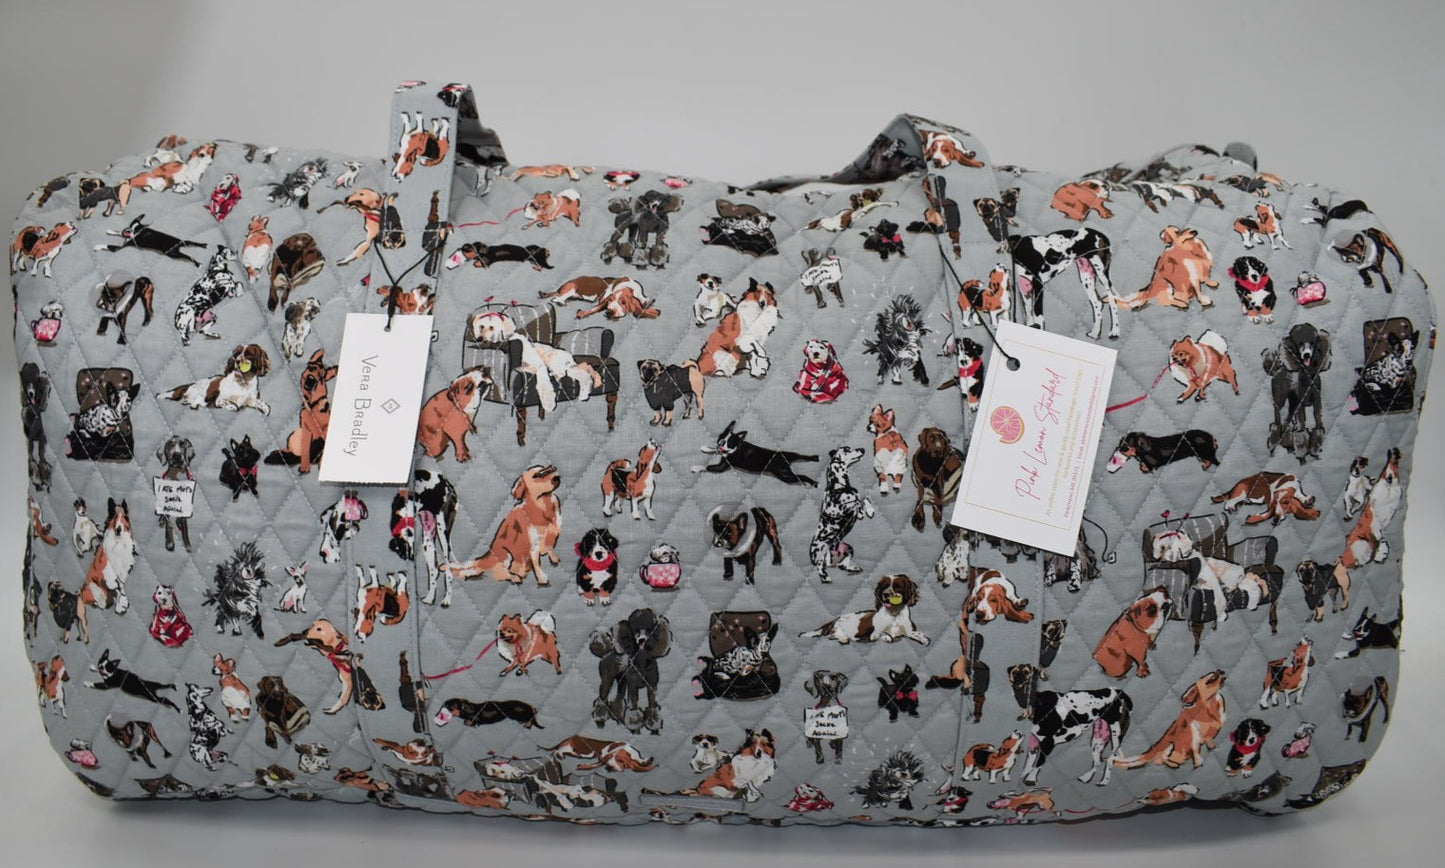 Vera Bradley XL Traveler Duffel Bag in "Dog Show" Pattern